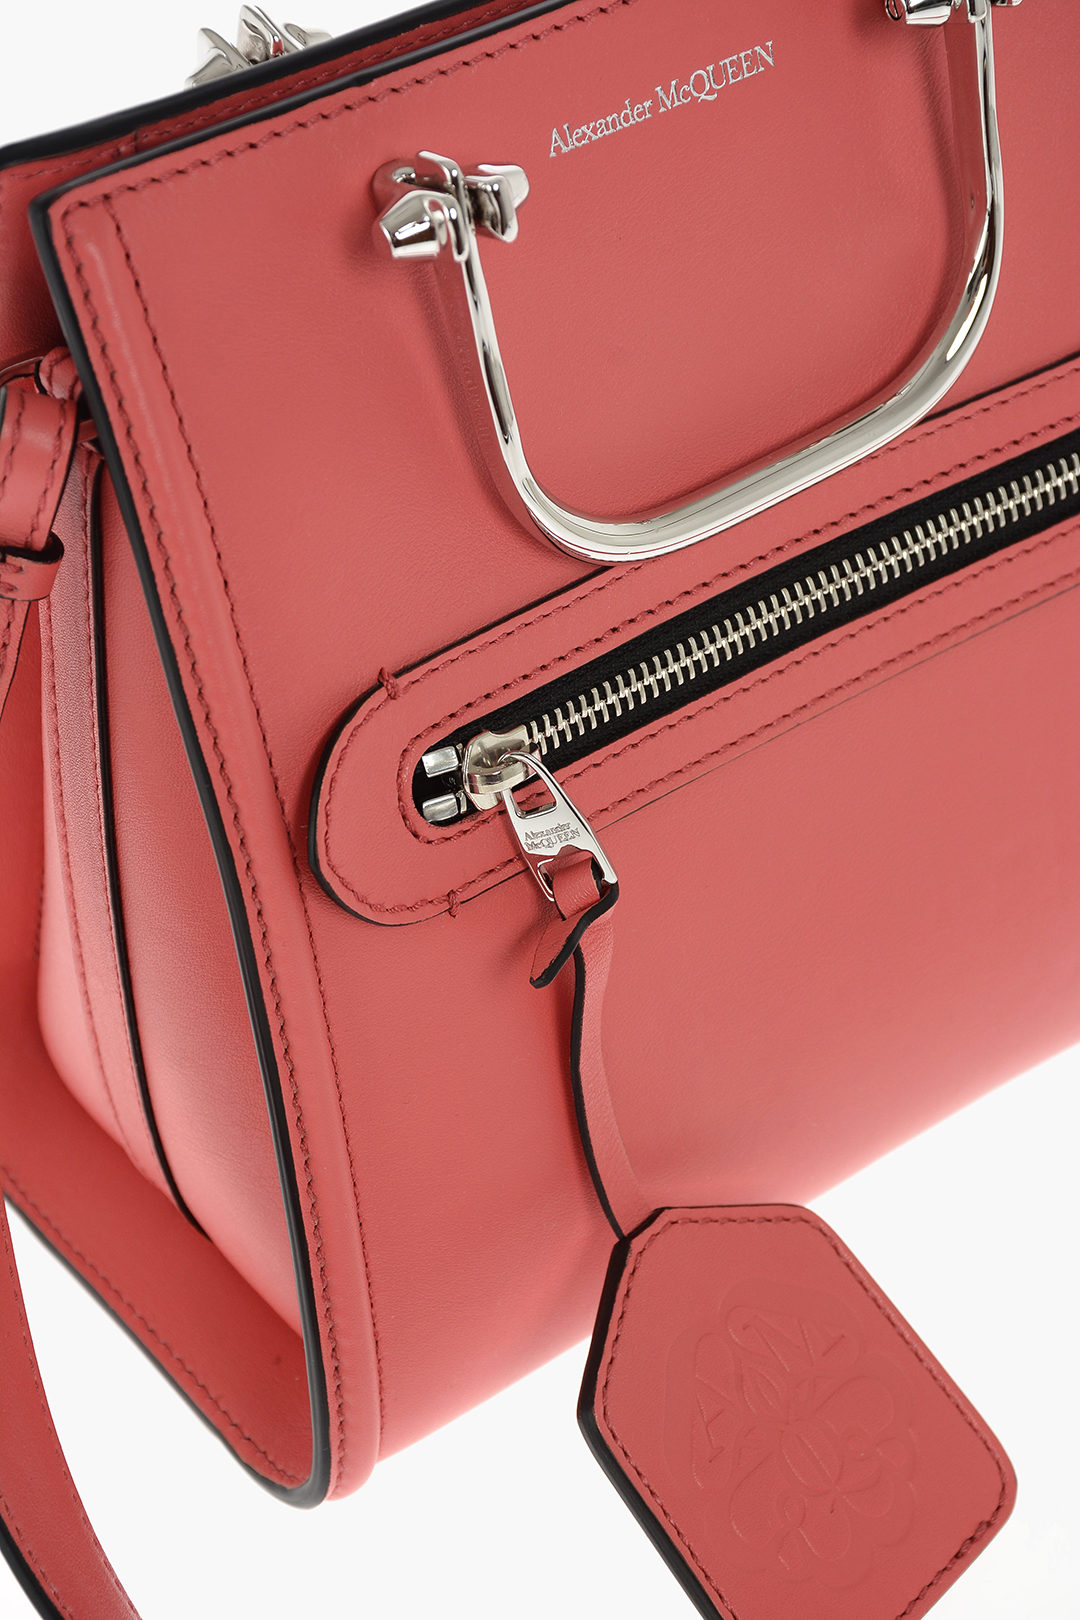 Alexander McQueen | Bags | Alexander Mcqueen Obsession Print Leather Wallet  | Poshmark